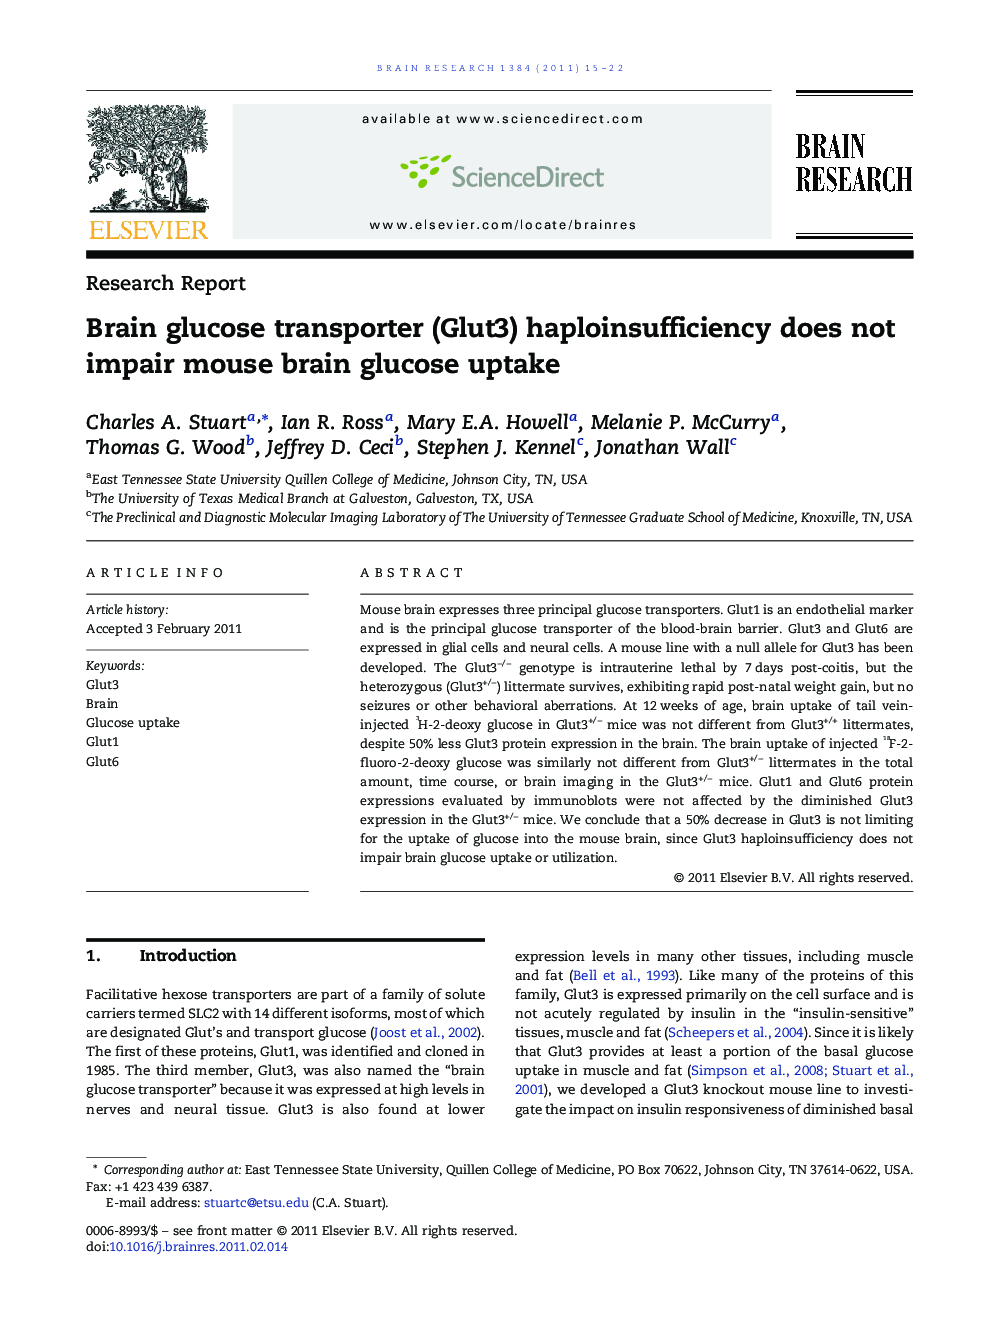 Research ReportBrain glucose transporter (Glut3) haploinsufficiency does not impair mouse brain glucose uptake